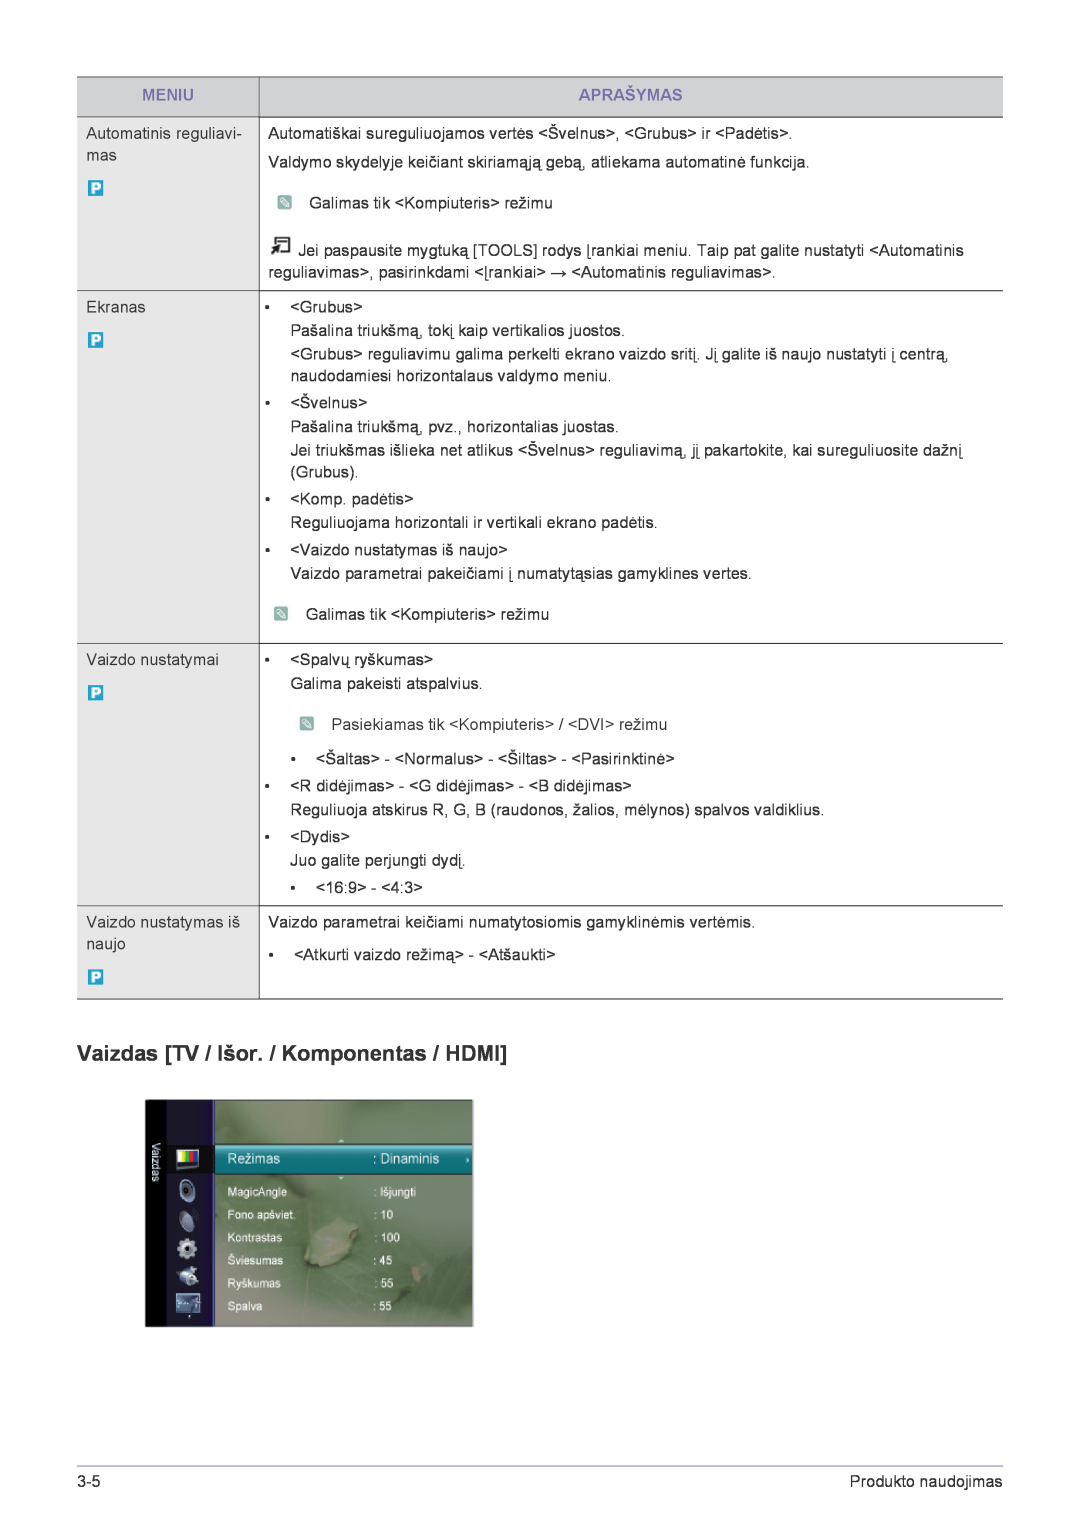 Samsung LS22FMDGF/EN manual Vaizdas TV / Išor. / Komponentas / HDMI, Meniu, Aprašymas 